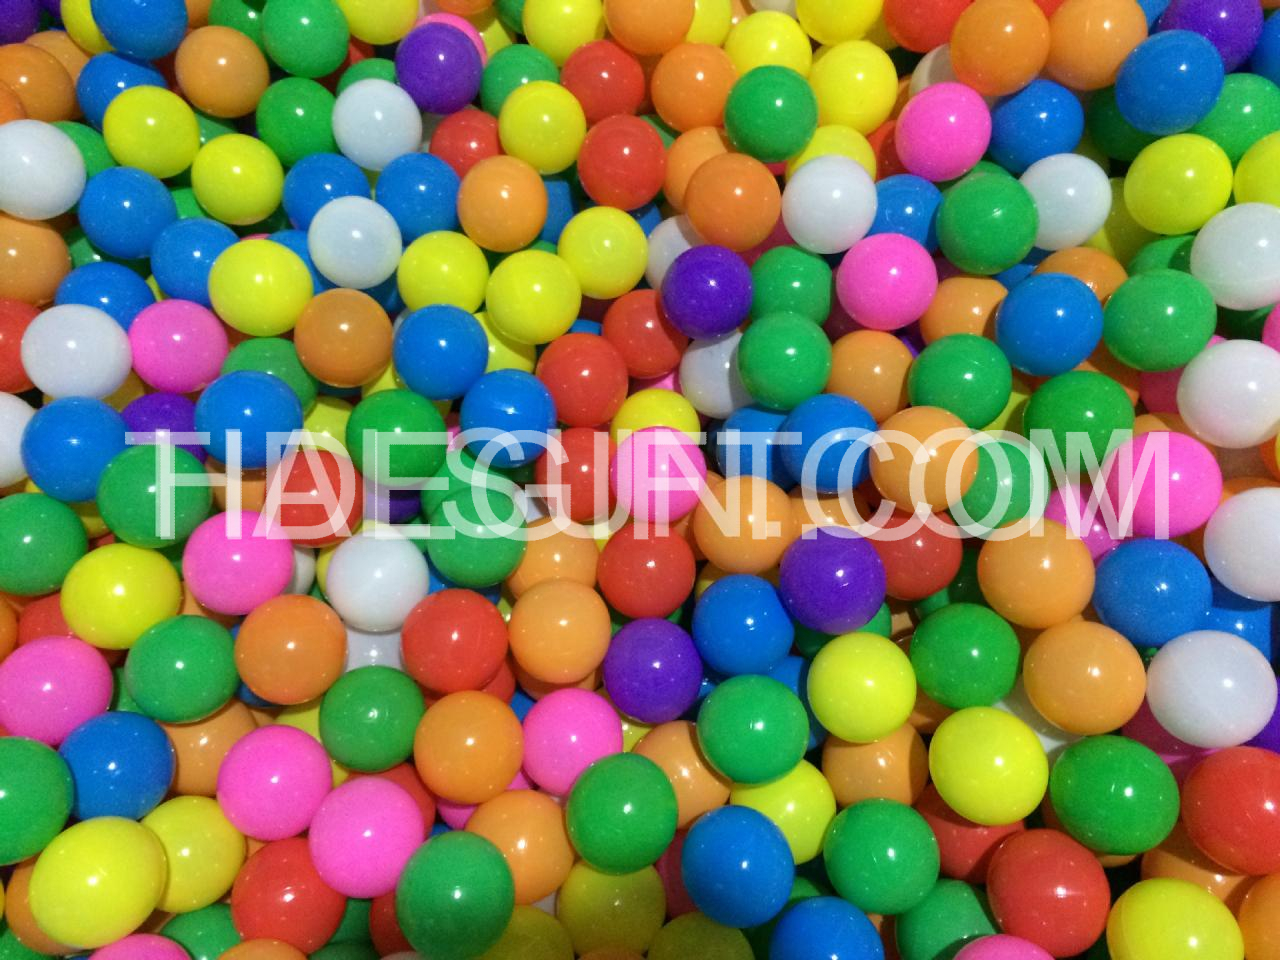 plastic-ocean-balls-8.jpg